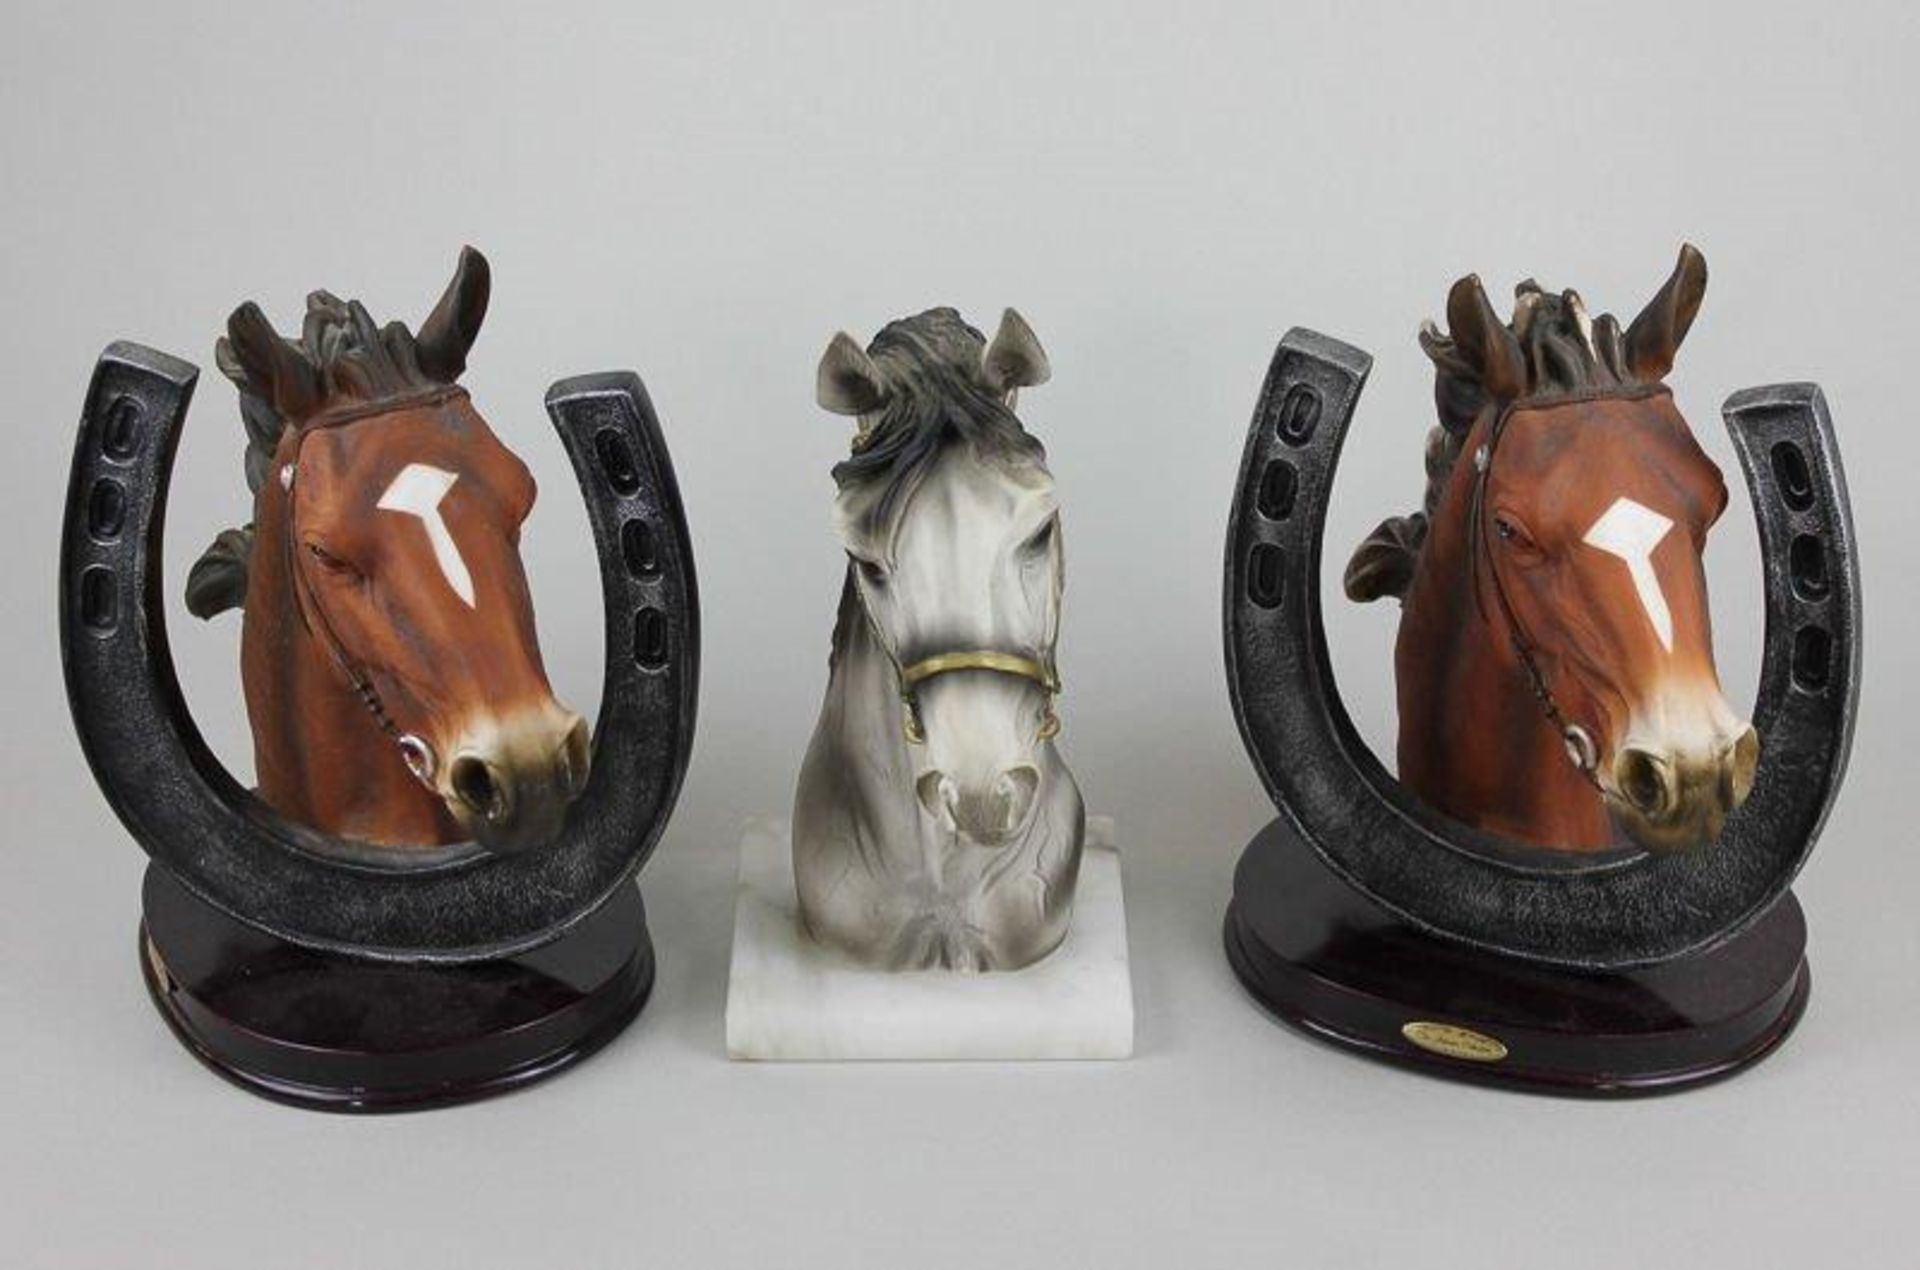 Pair Juliana Horses in Horseshoe Frames plus one.
23cms high - onyx/marble base